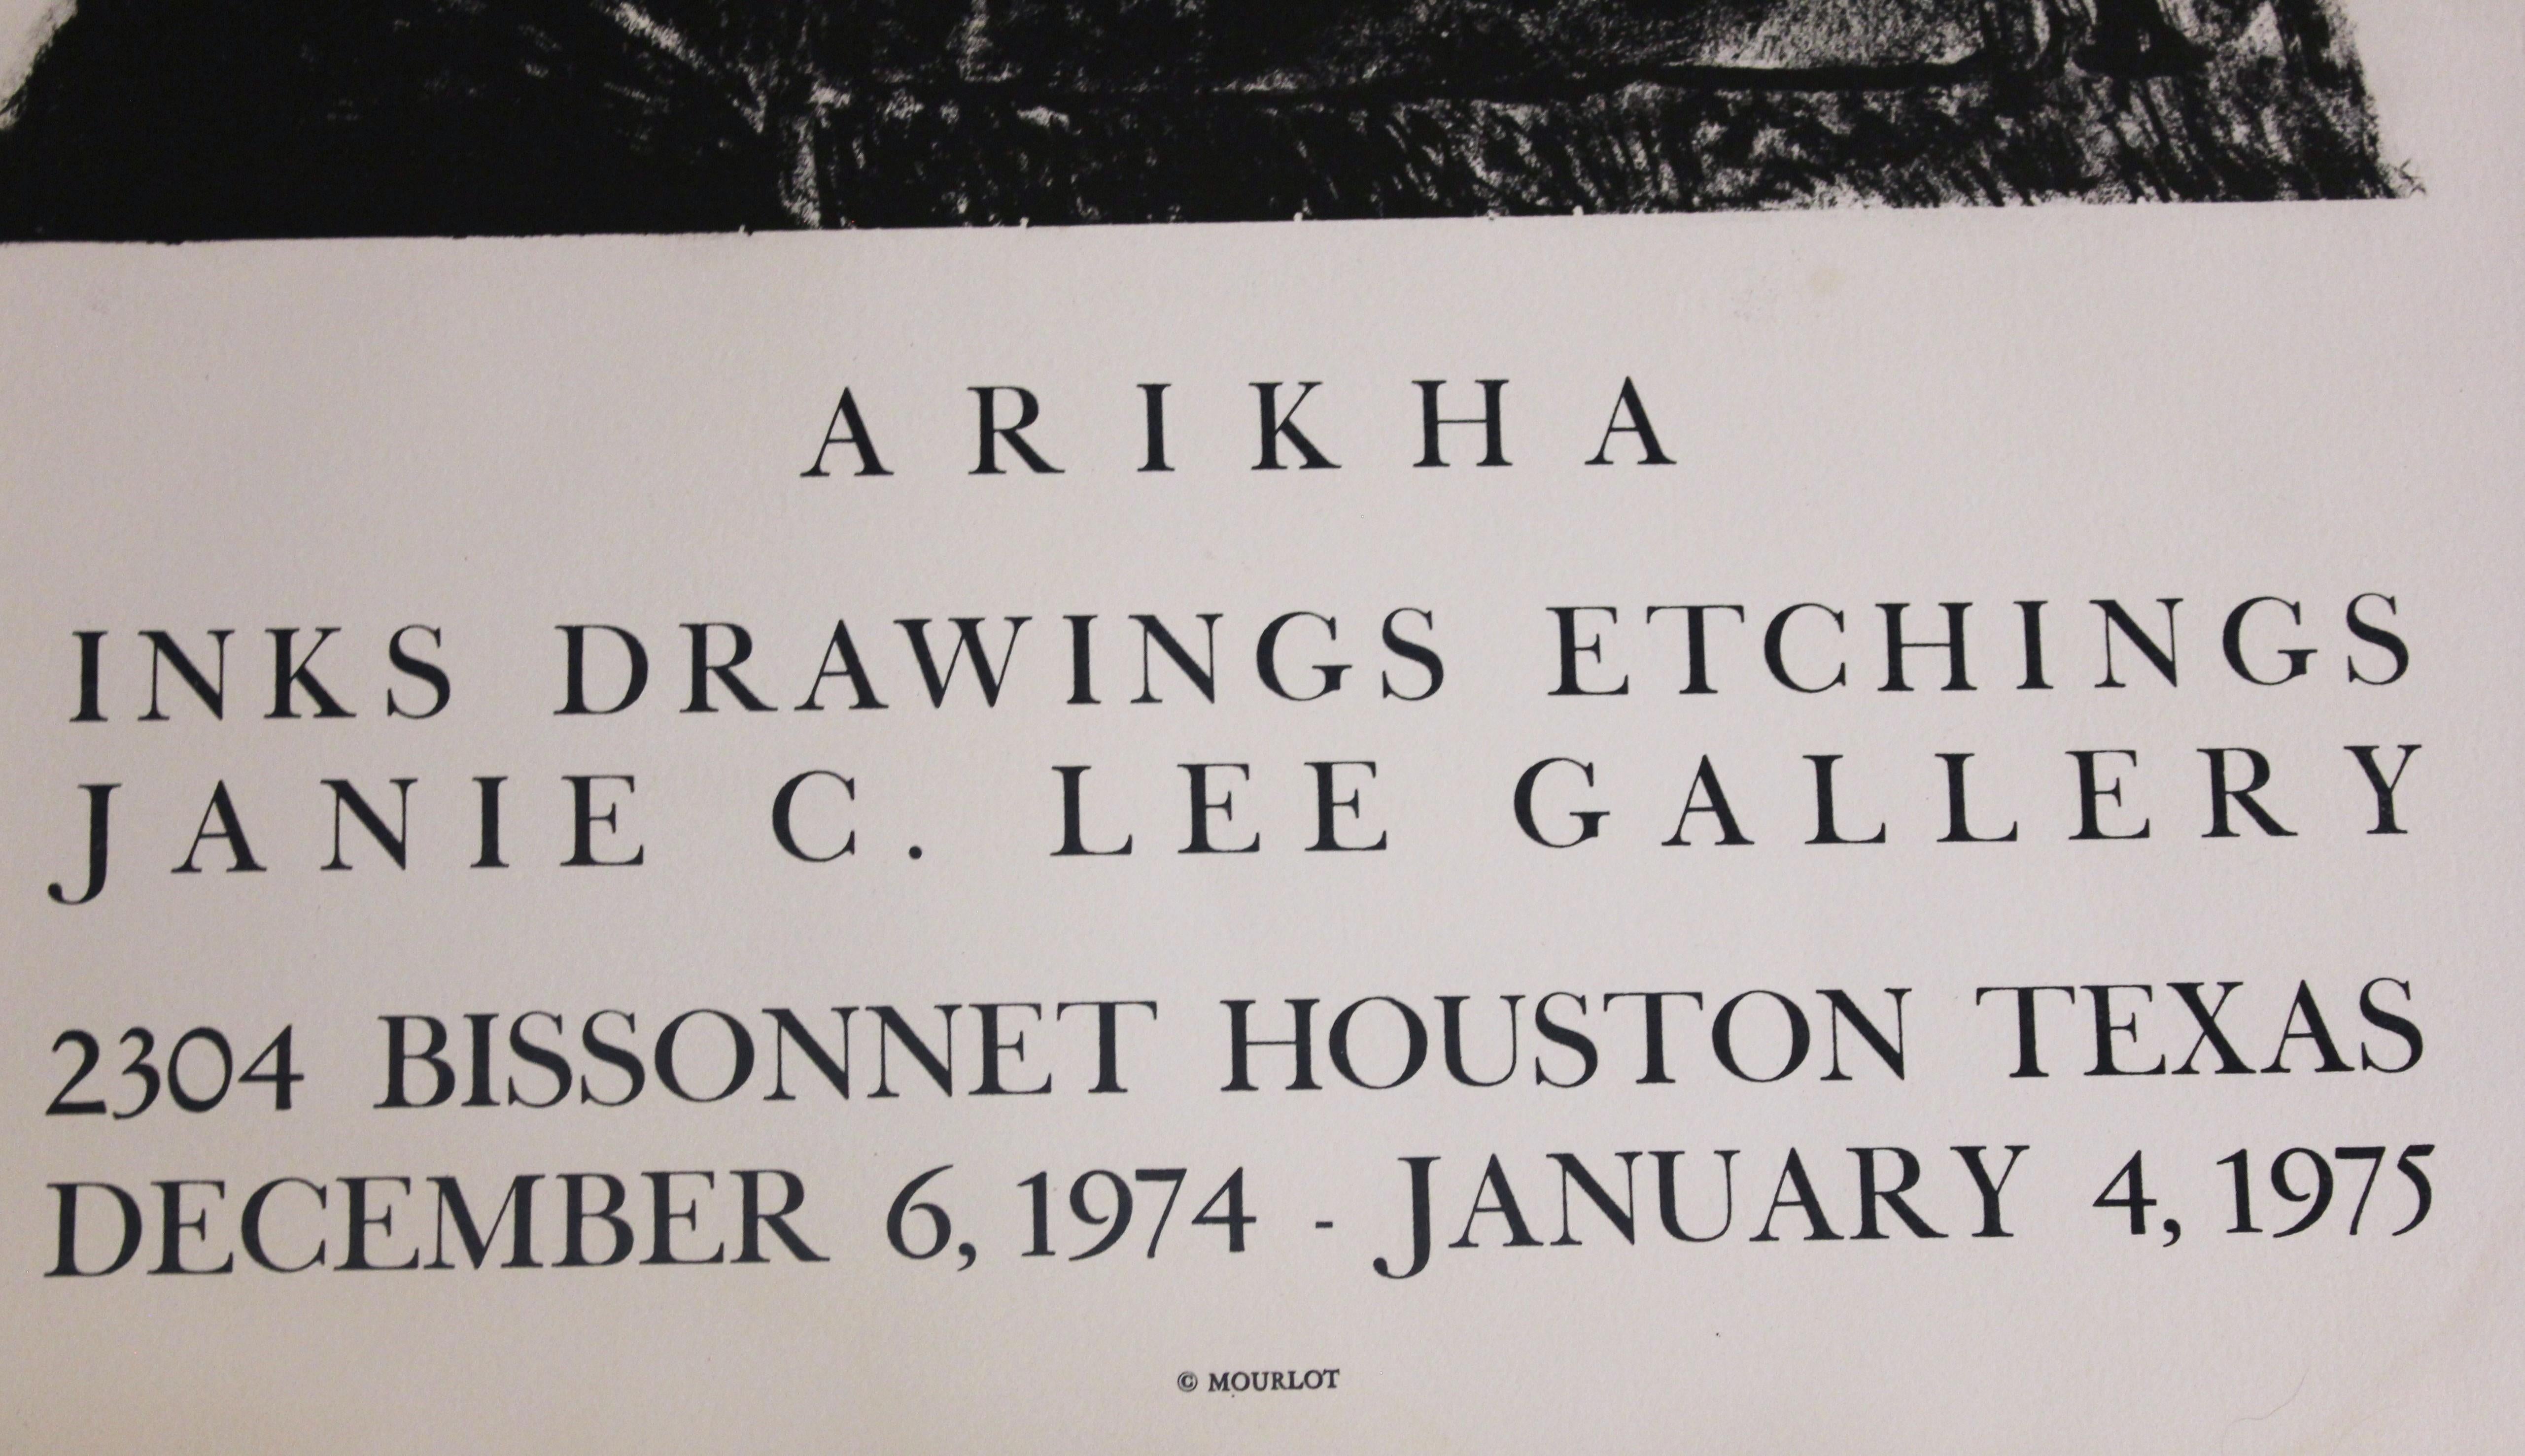 Arikha Ink Drawings Etchings Gallery Poster from Janie C. Lee Gallery - Print by Avigdor Arikha